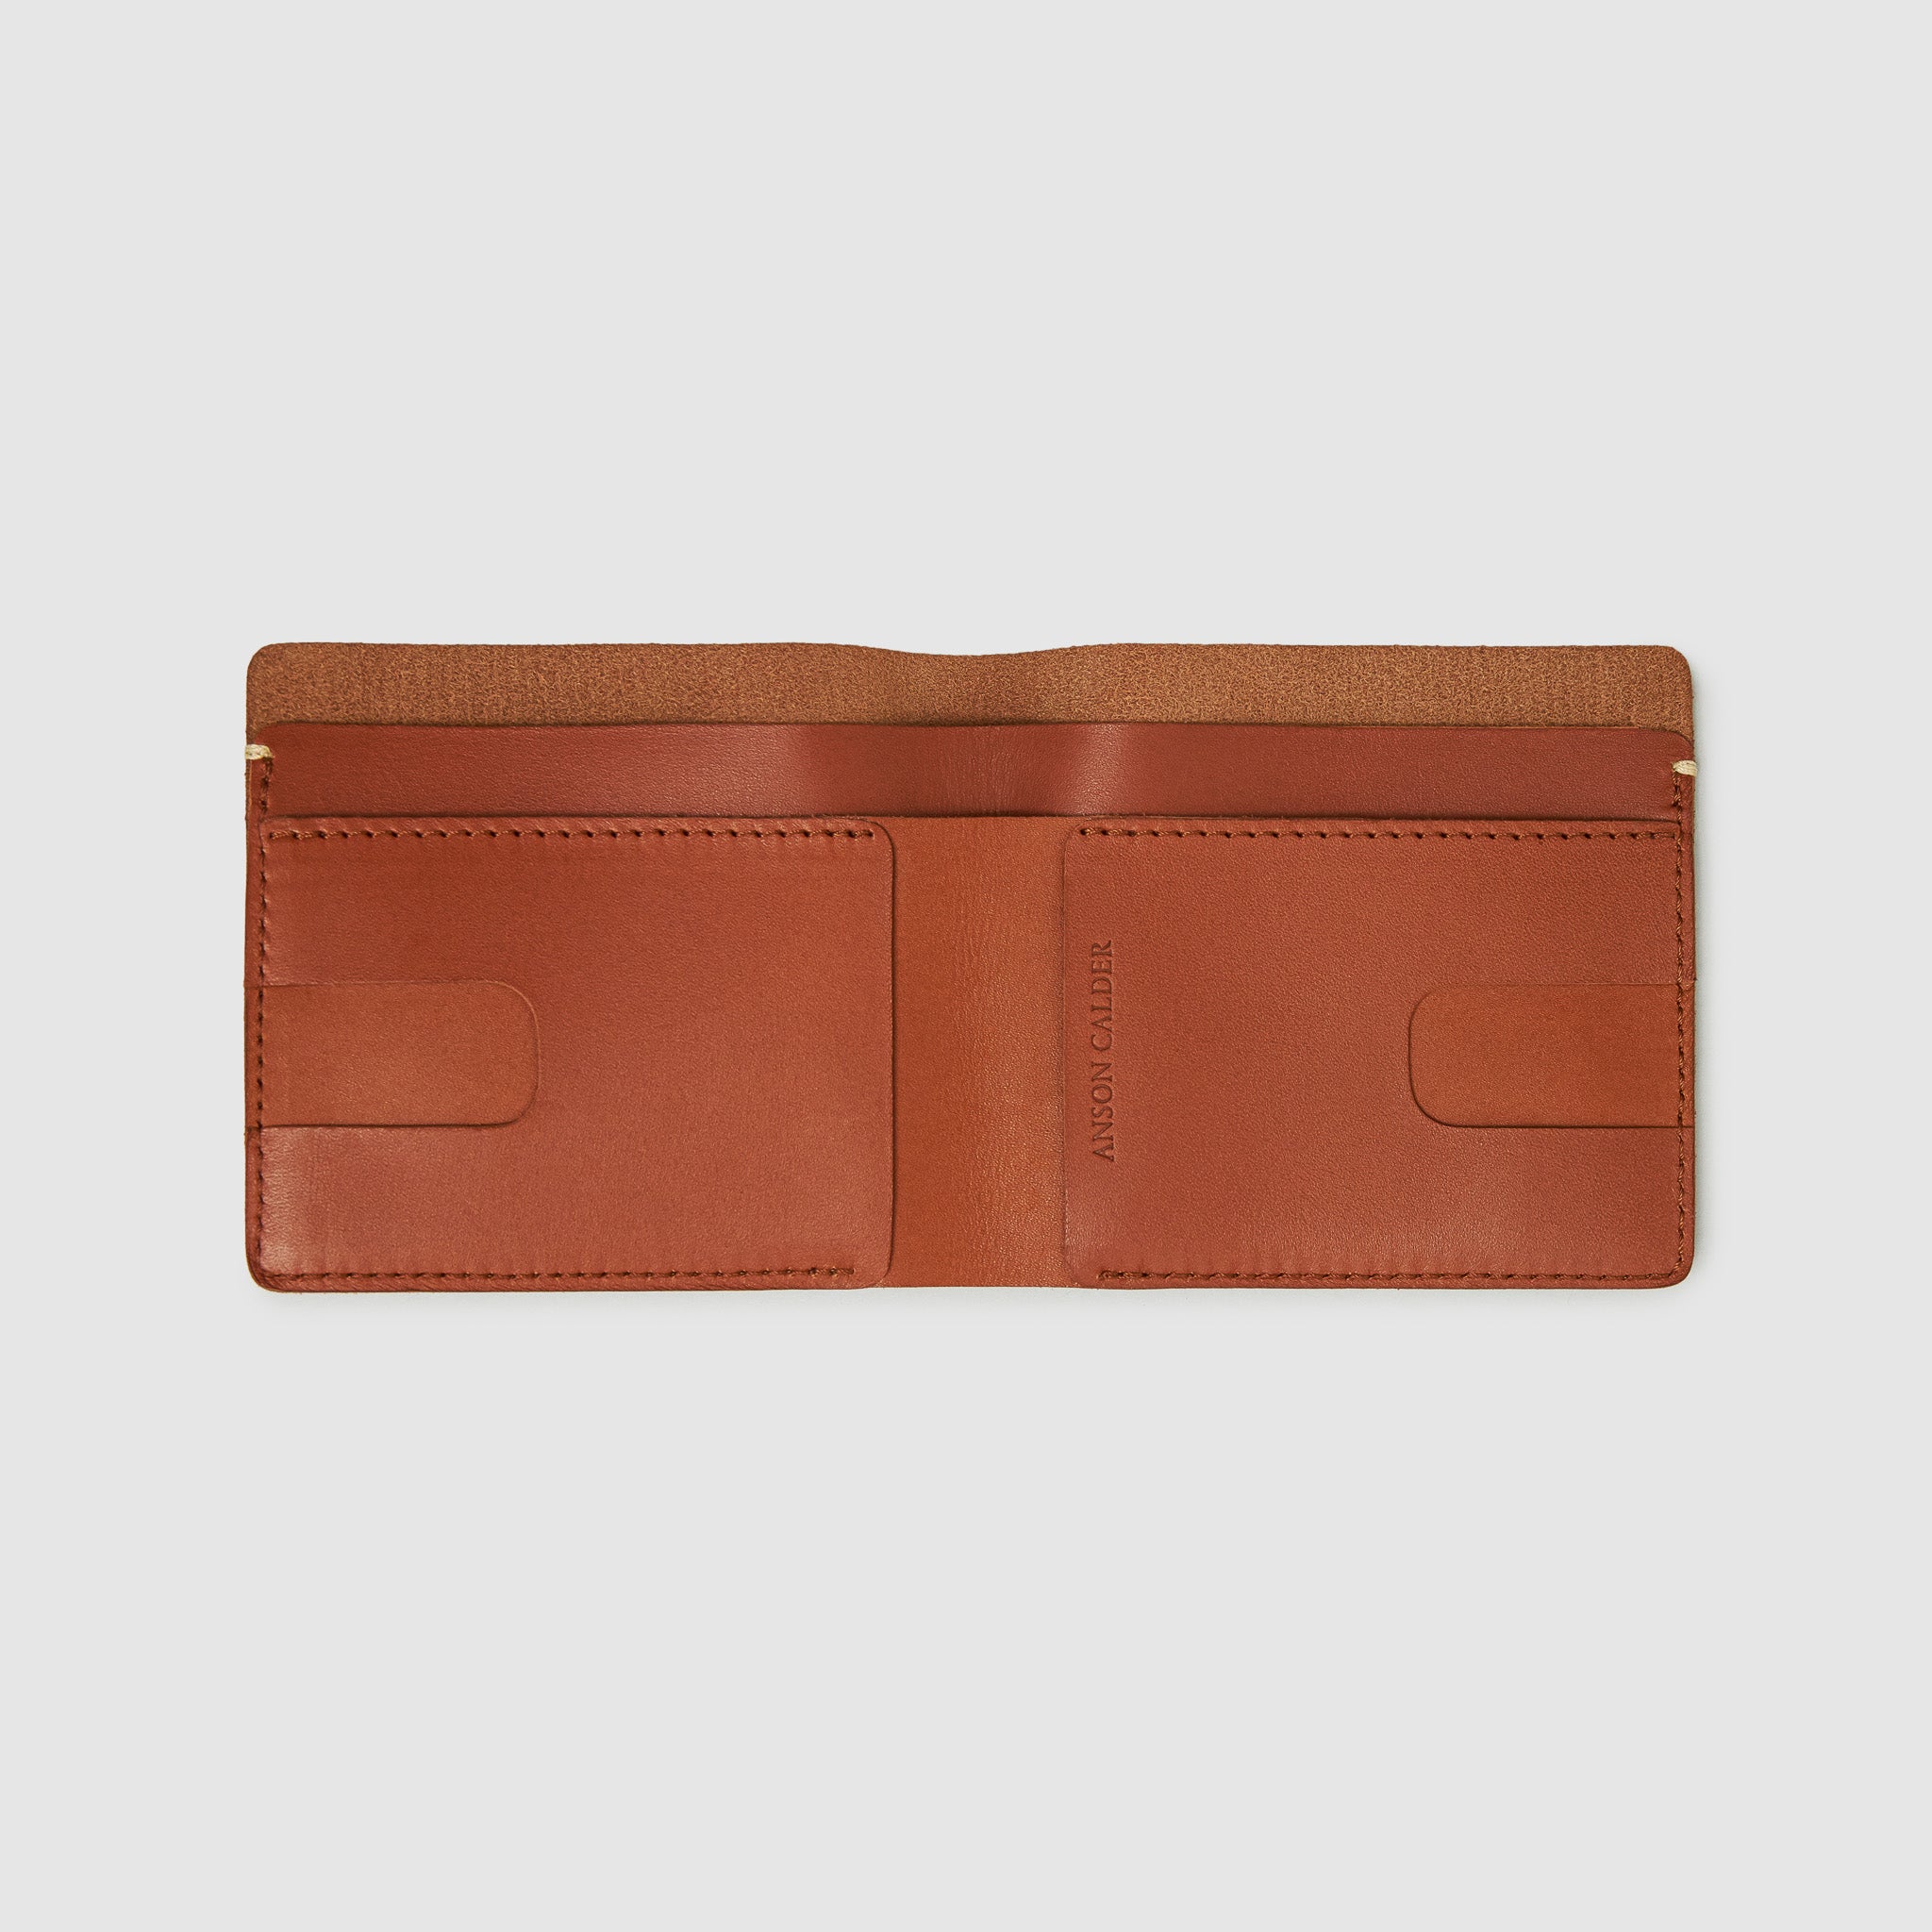 Anson Calder International Billfold Wallet RFID french calfskin leather _cognac